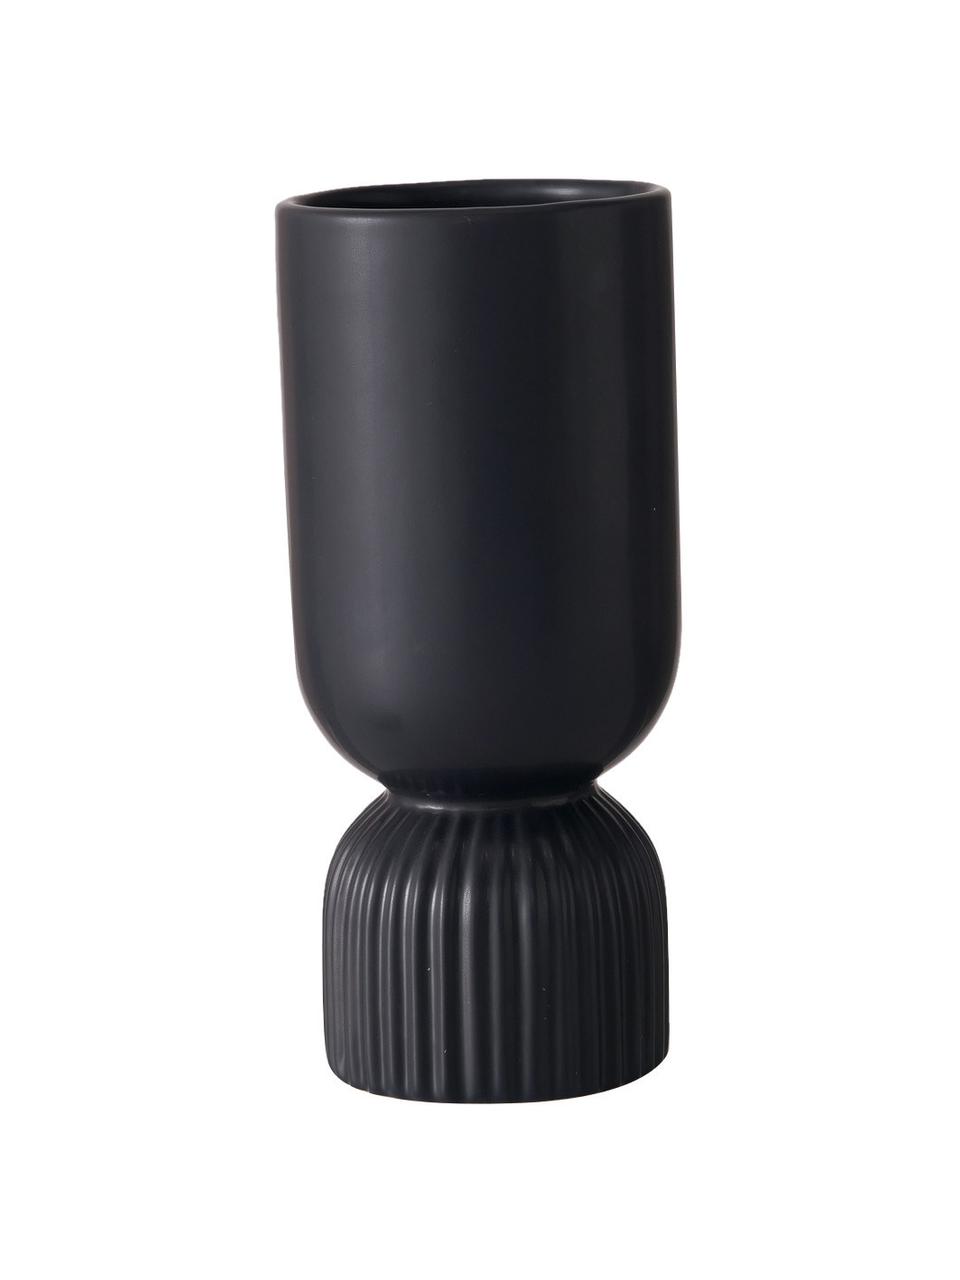 Vase grès noir Gino, 2 élém., Grès cérame, Noir, Ø 10 x haut. 23 cm